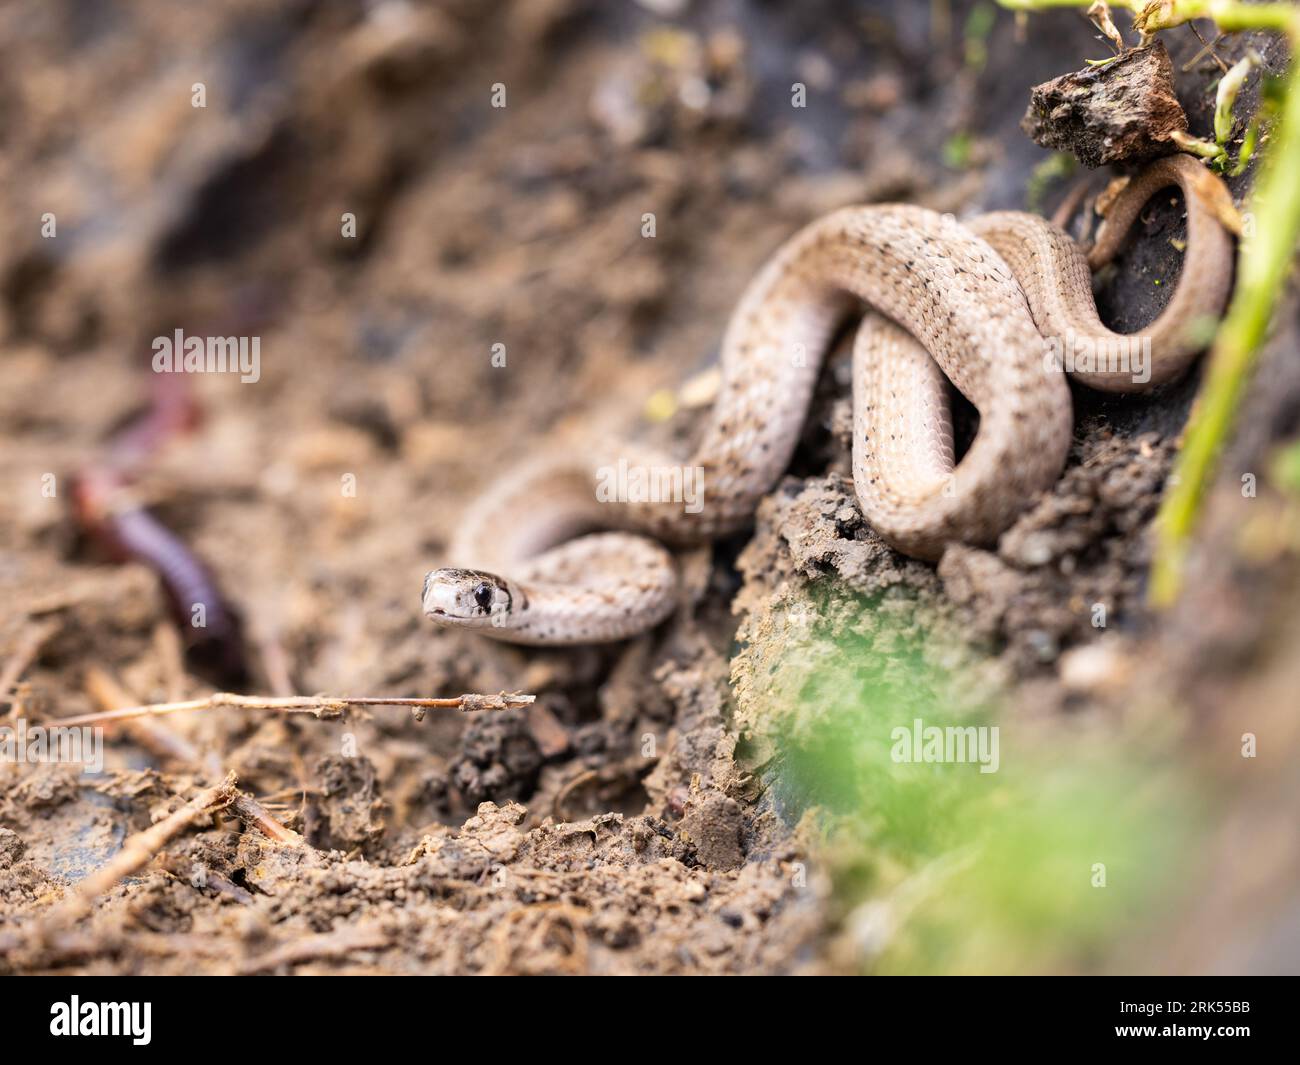 A Texas brown snake (Storeria dekayi texana) coiled in the soil beneath a leafy tree Stock Photo